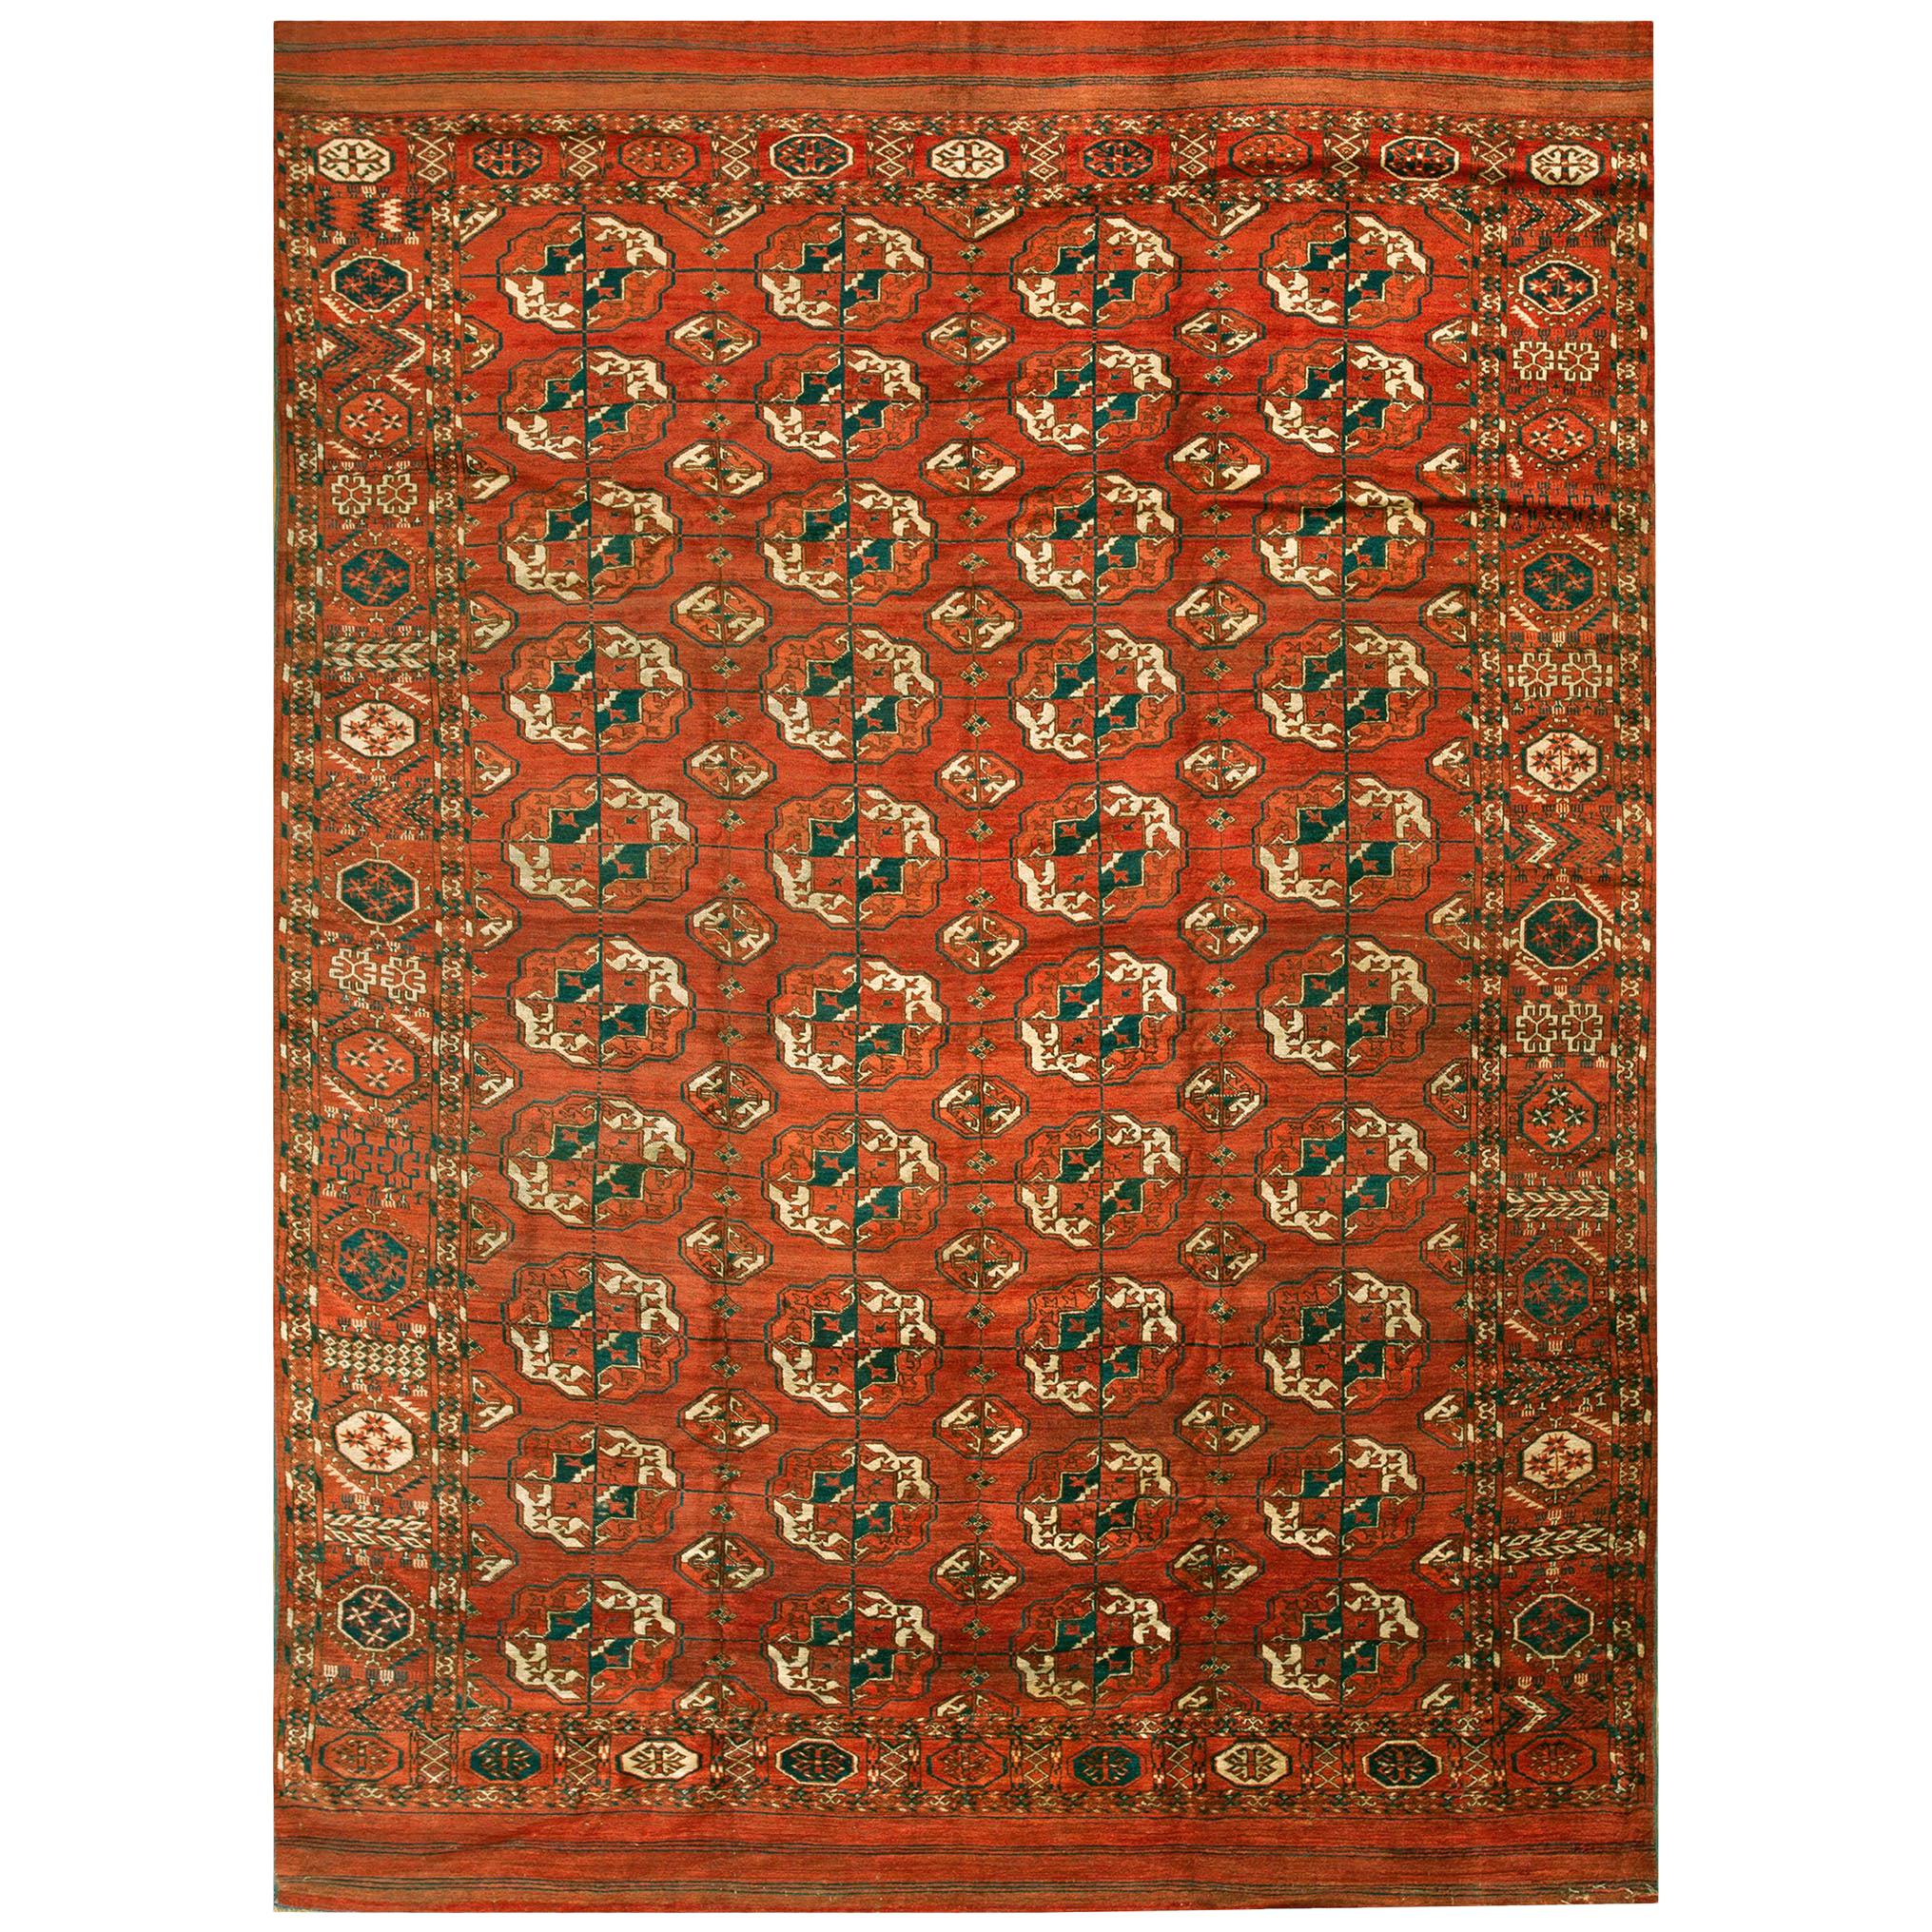 Mid 19th Century Central Asian Tekke Turkmen Main Carpet ( 6'6" x 9'-198 x 275 )